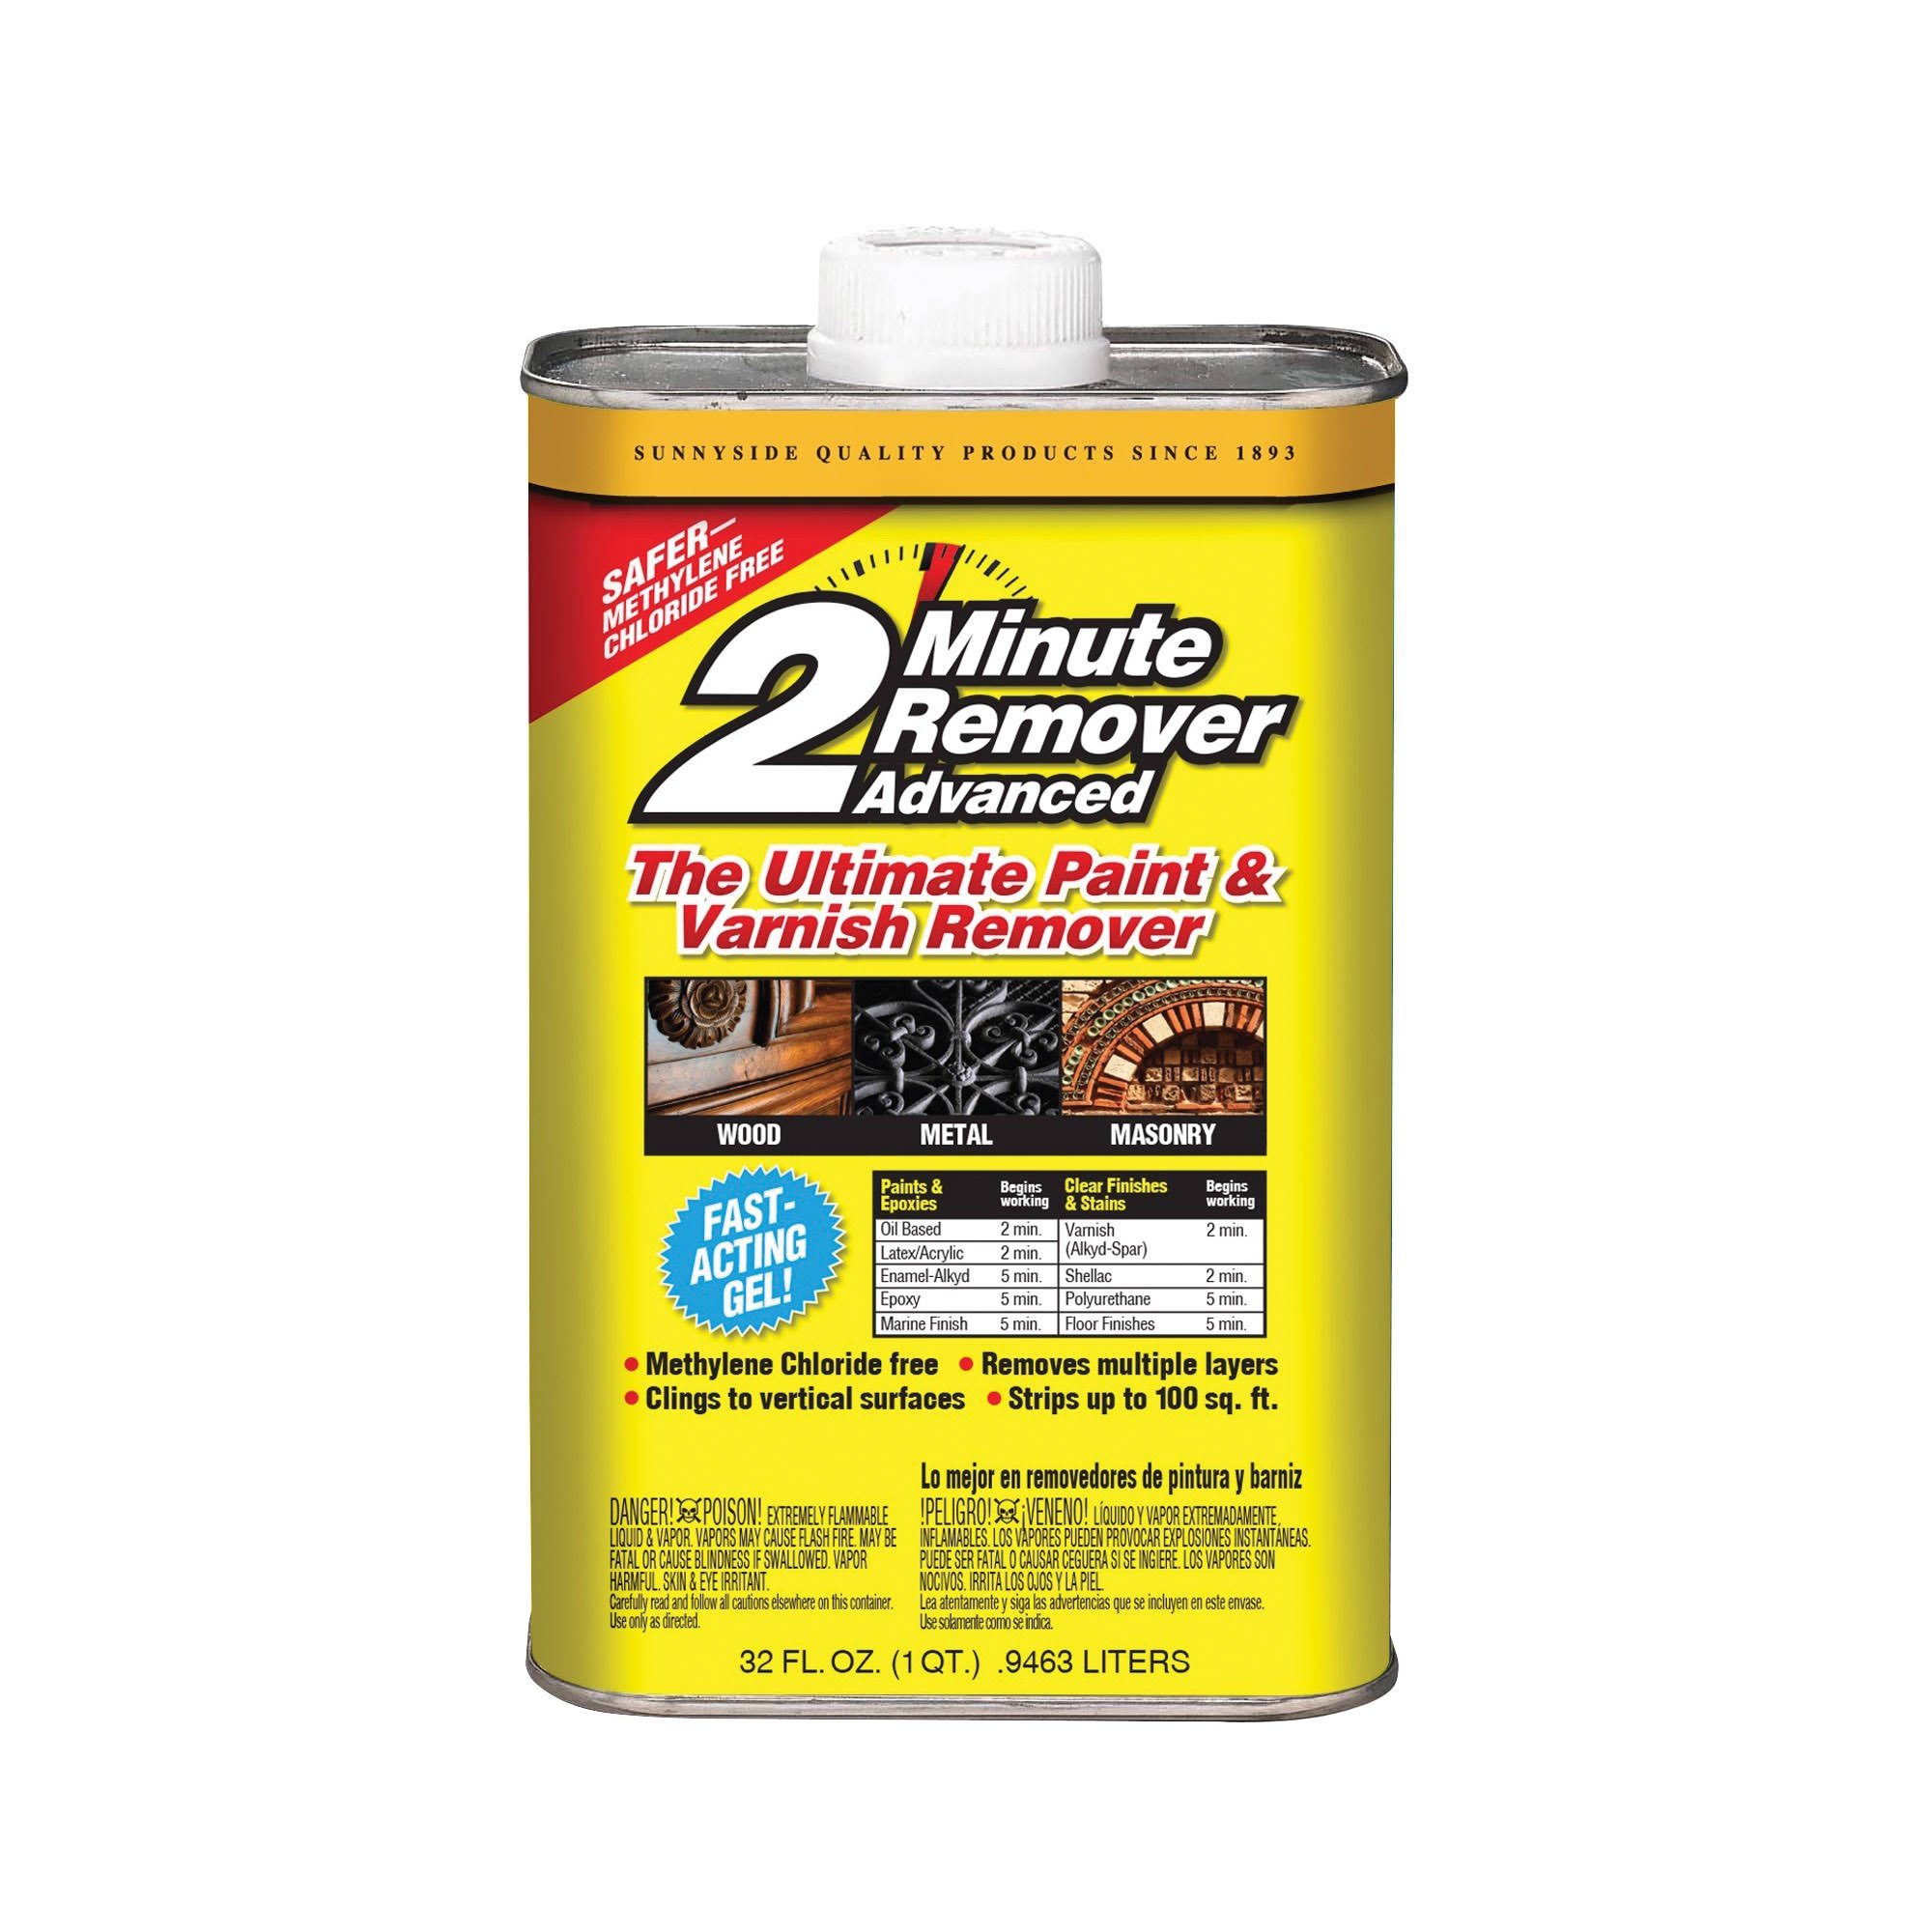 Sunnyside 2 Minute Remover Advanced Paint & Varnish Remover, 32 fl. oz.